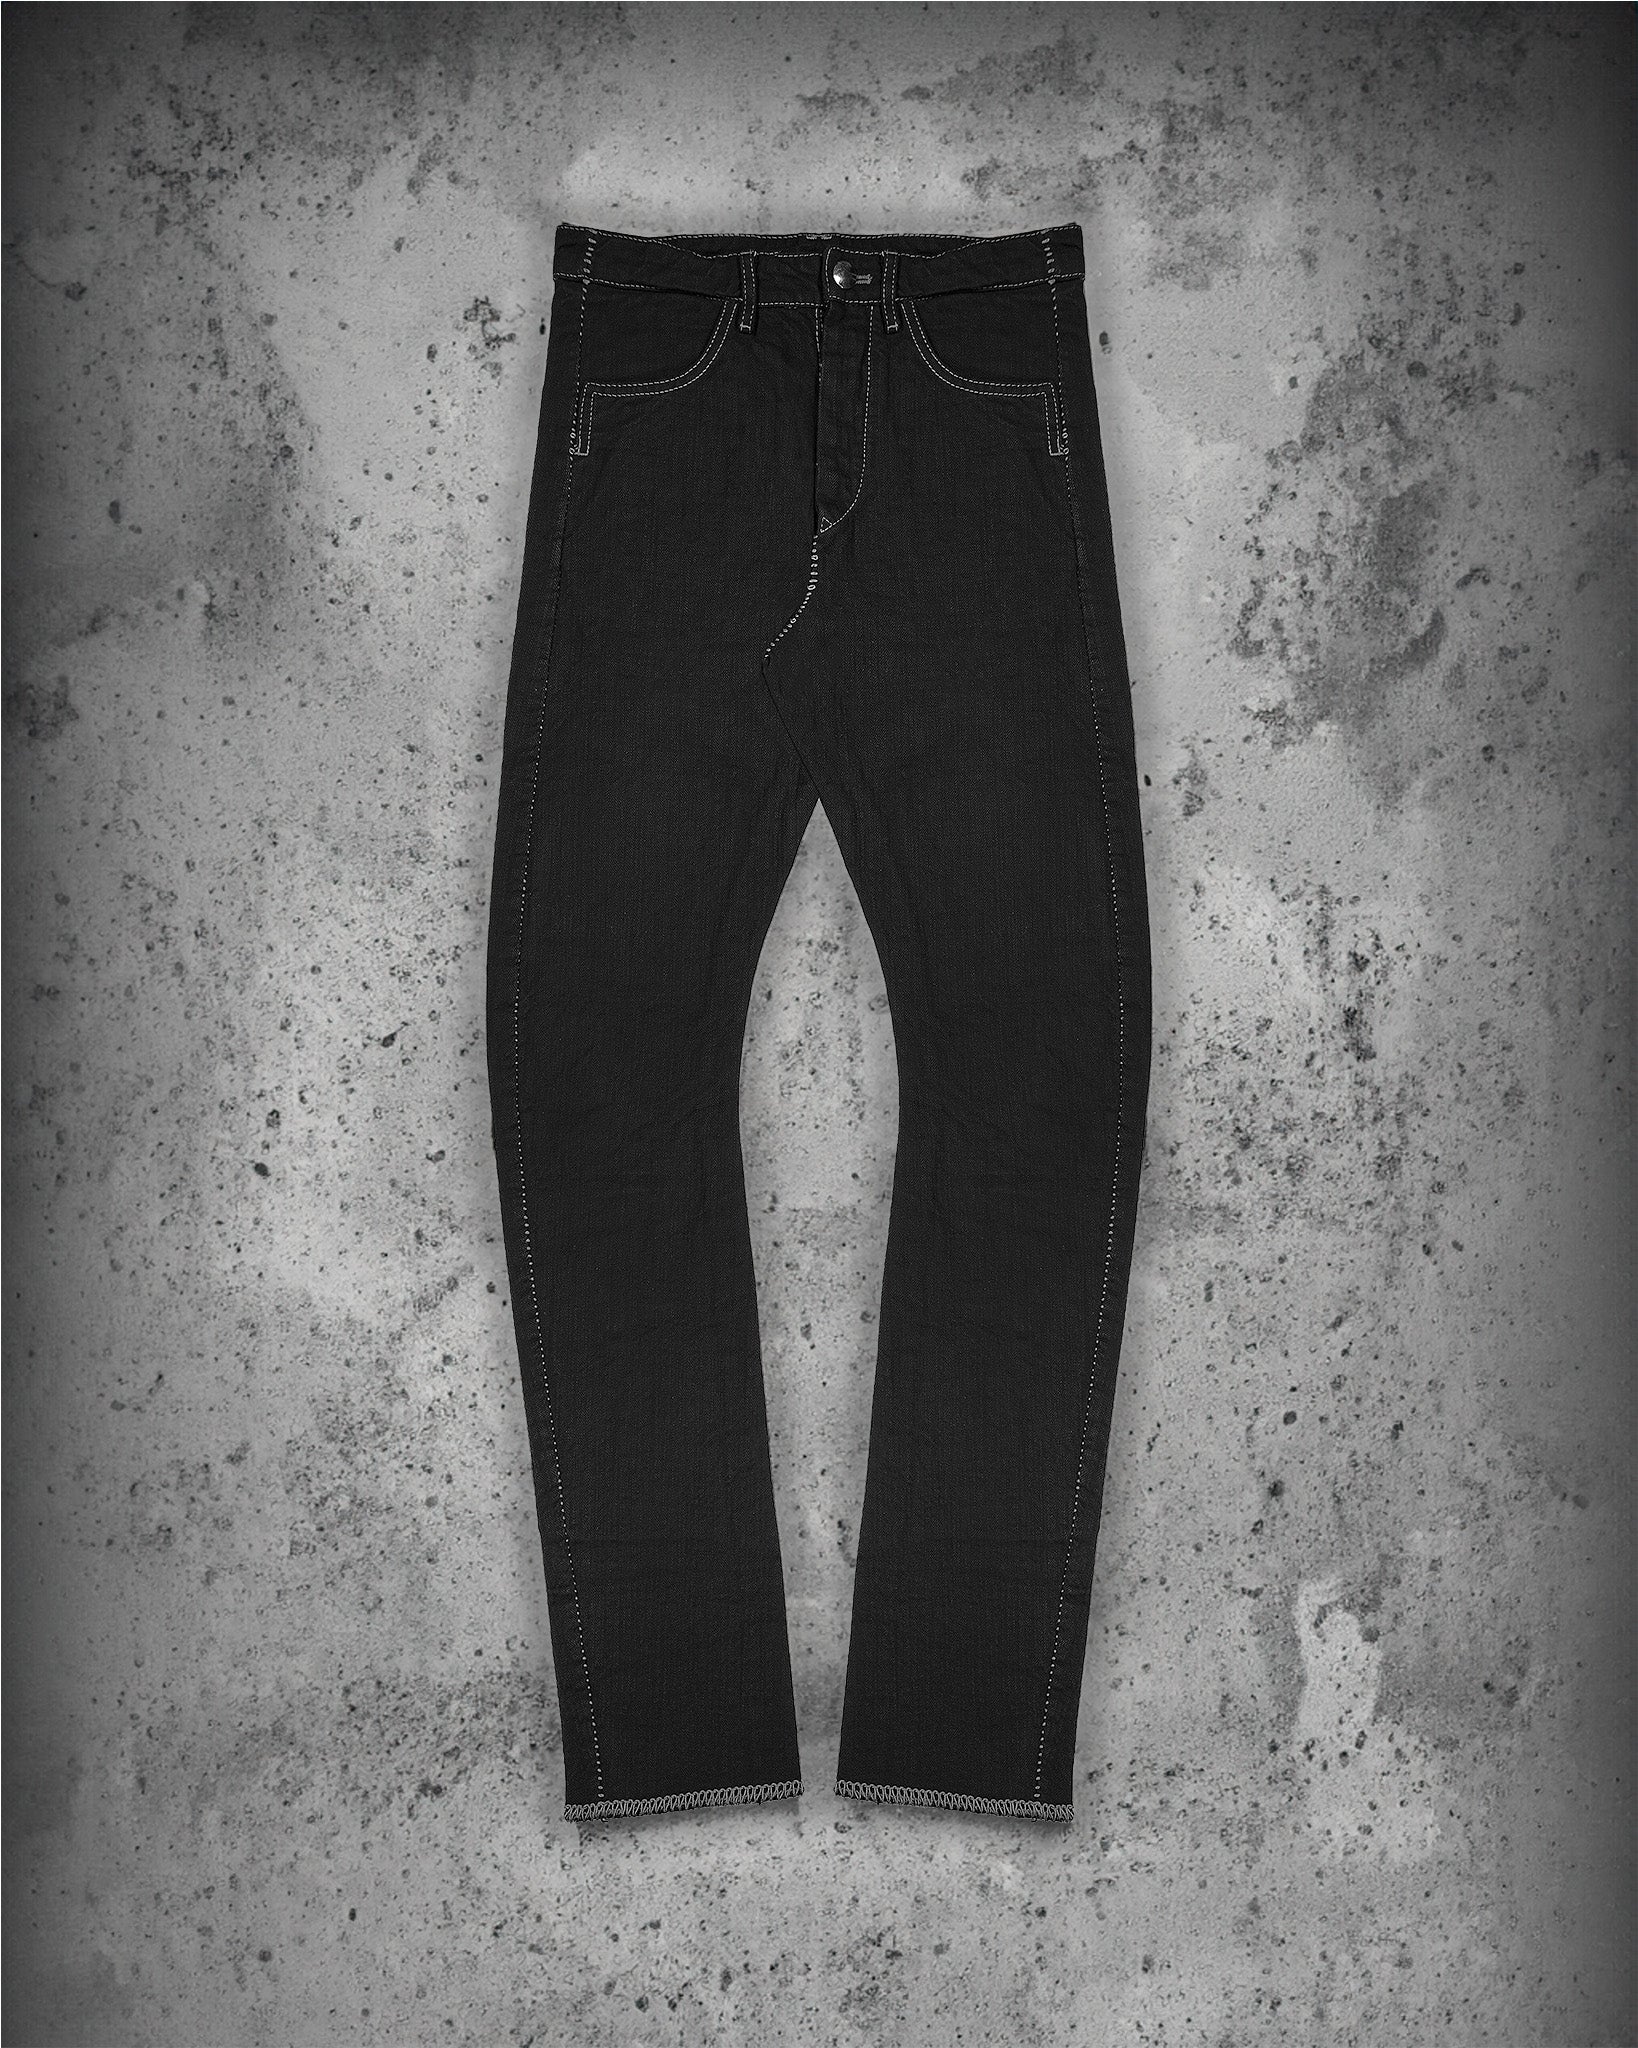 Carol Christian Poell Overlock J-Cut Jeans - SS07 “Paranoid” (JM/2251 KIT-W/1)